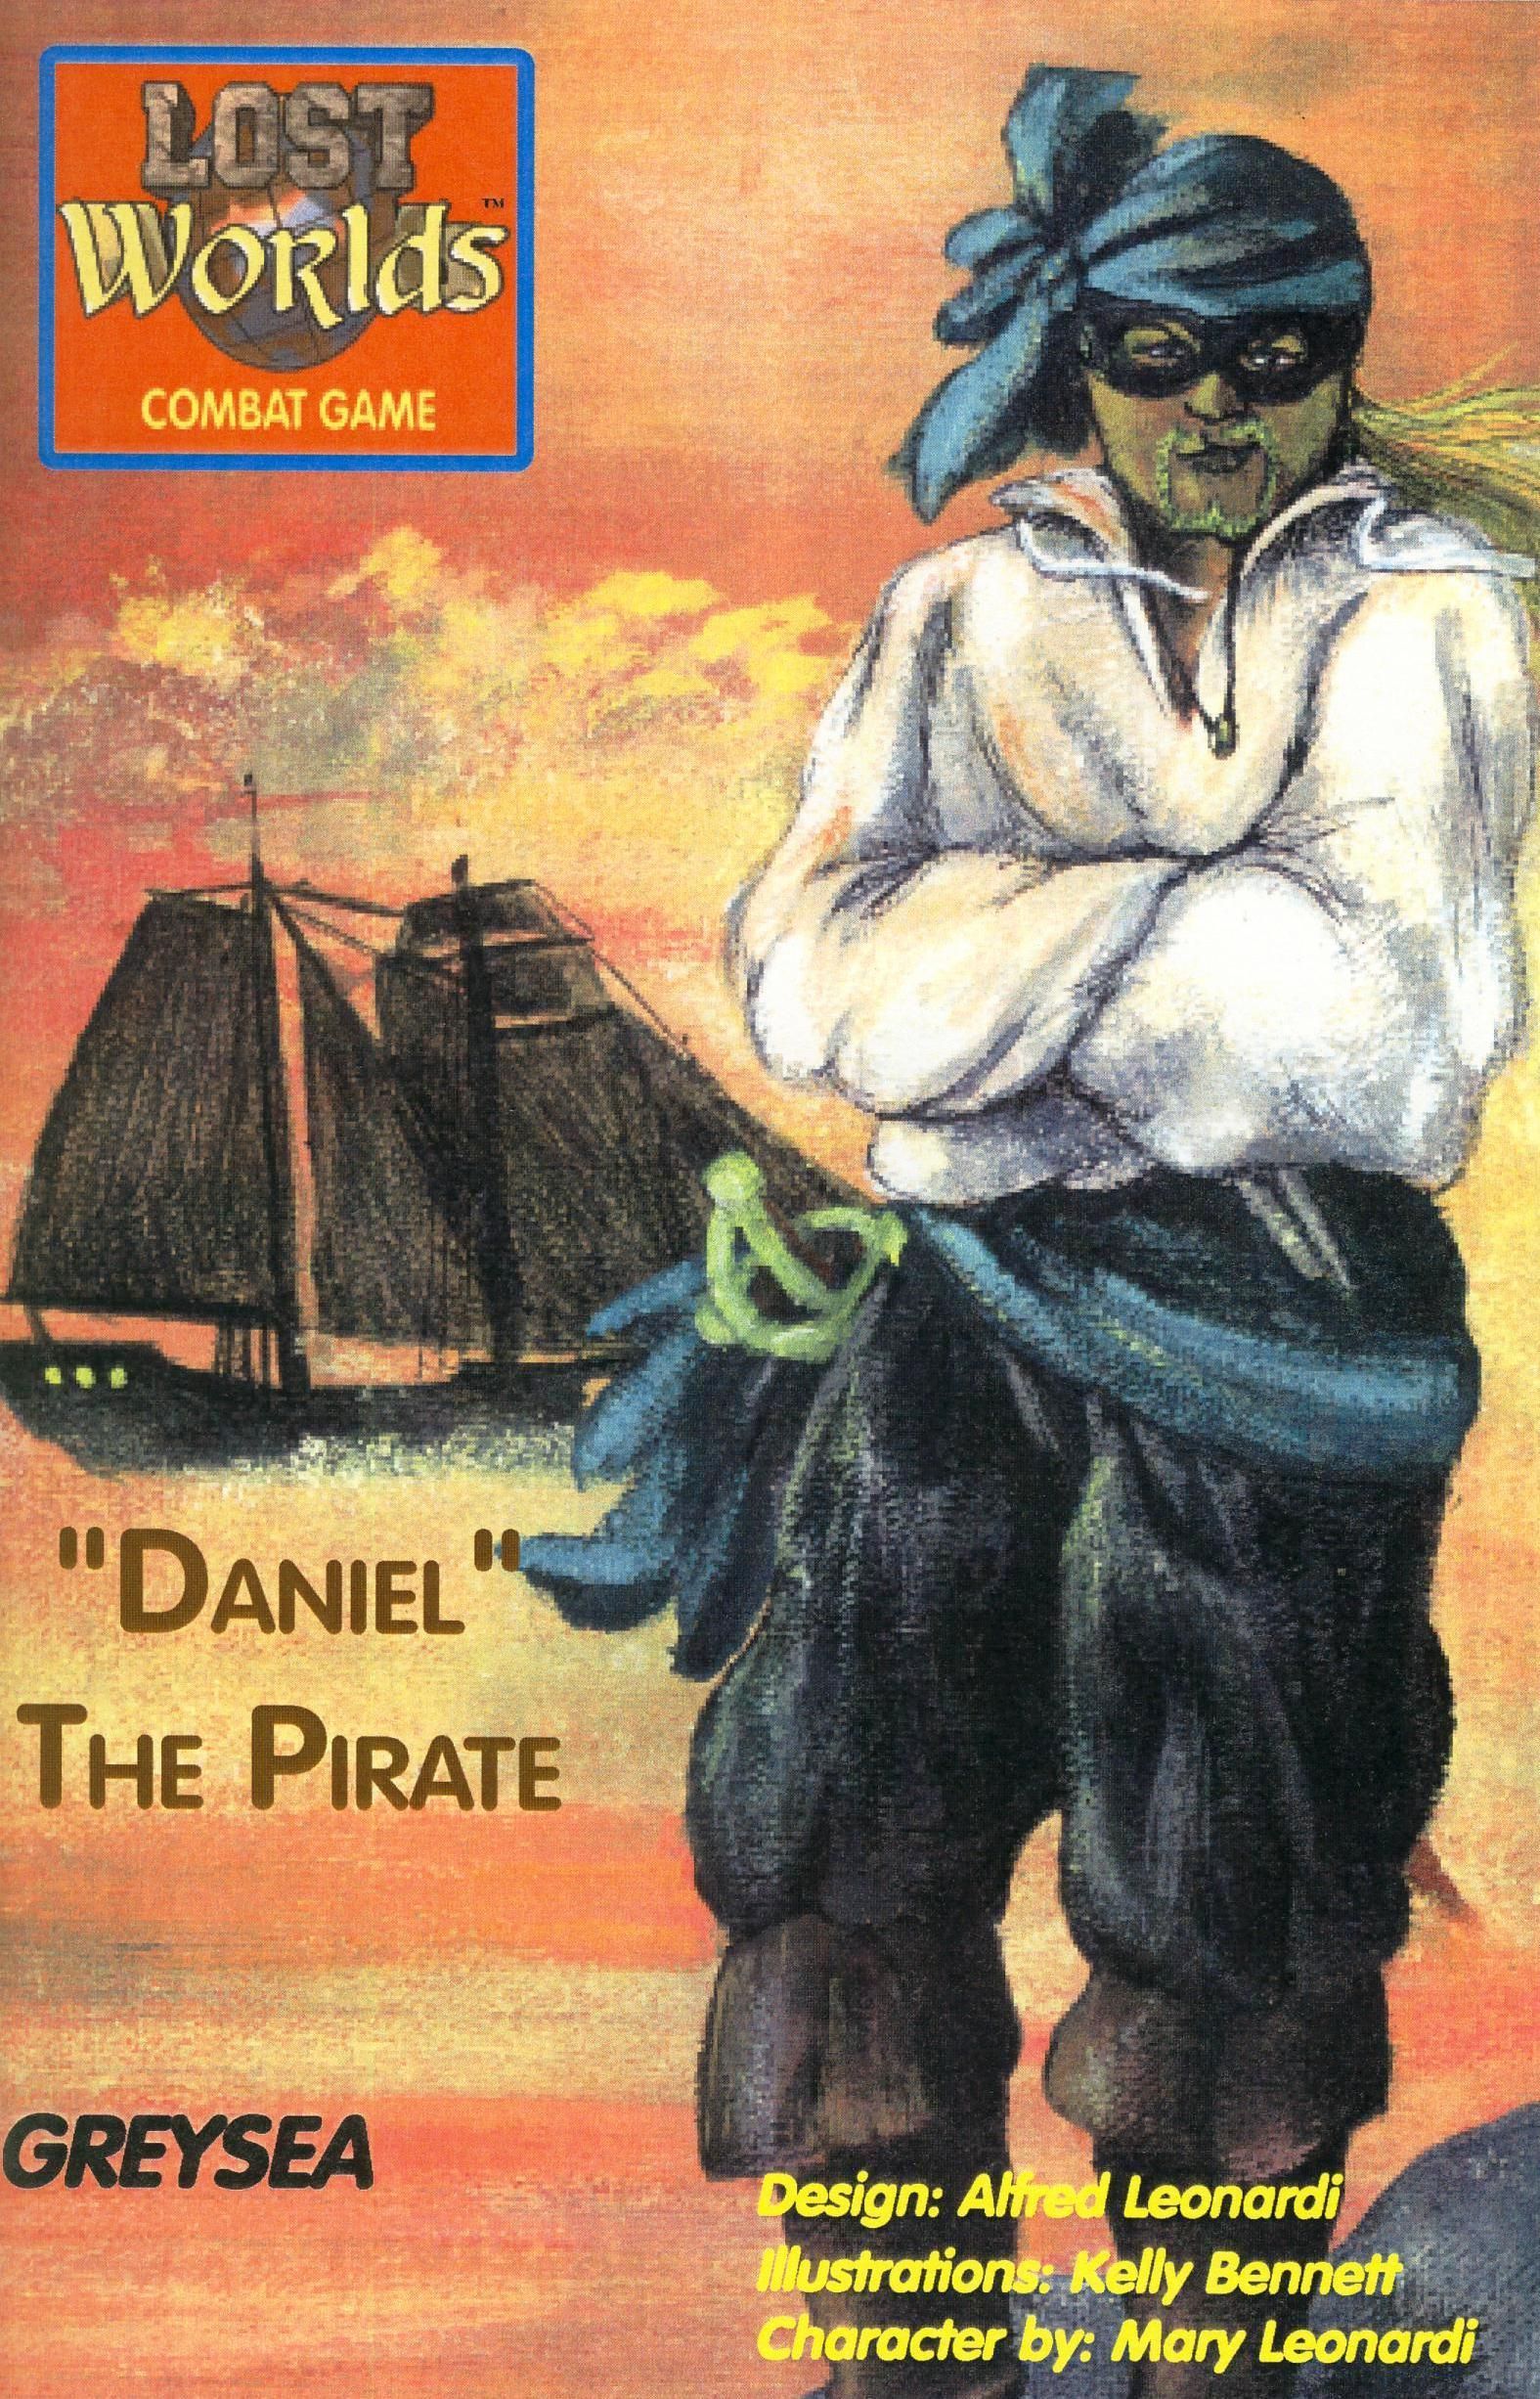 Lost Worlds: "Daniel" the Pirate